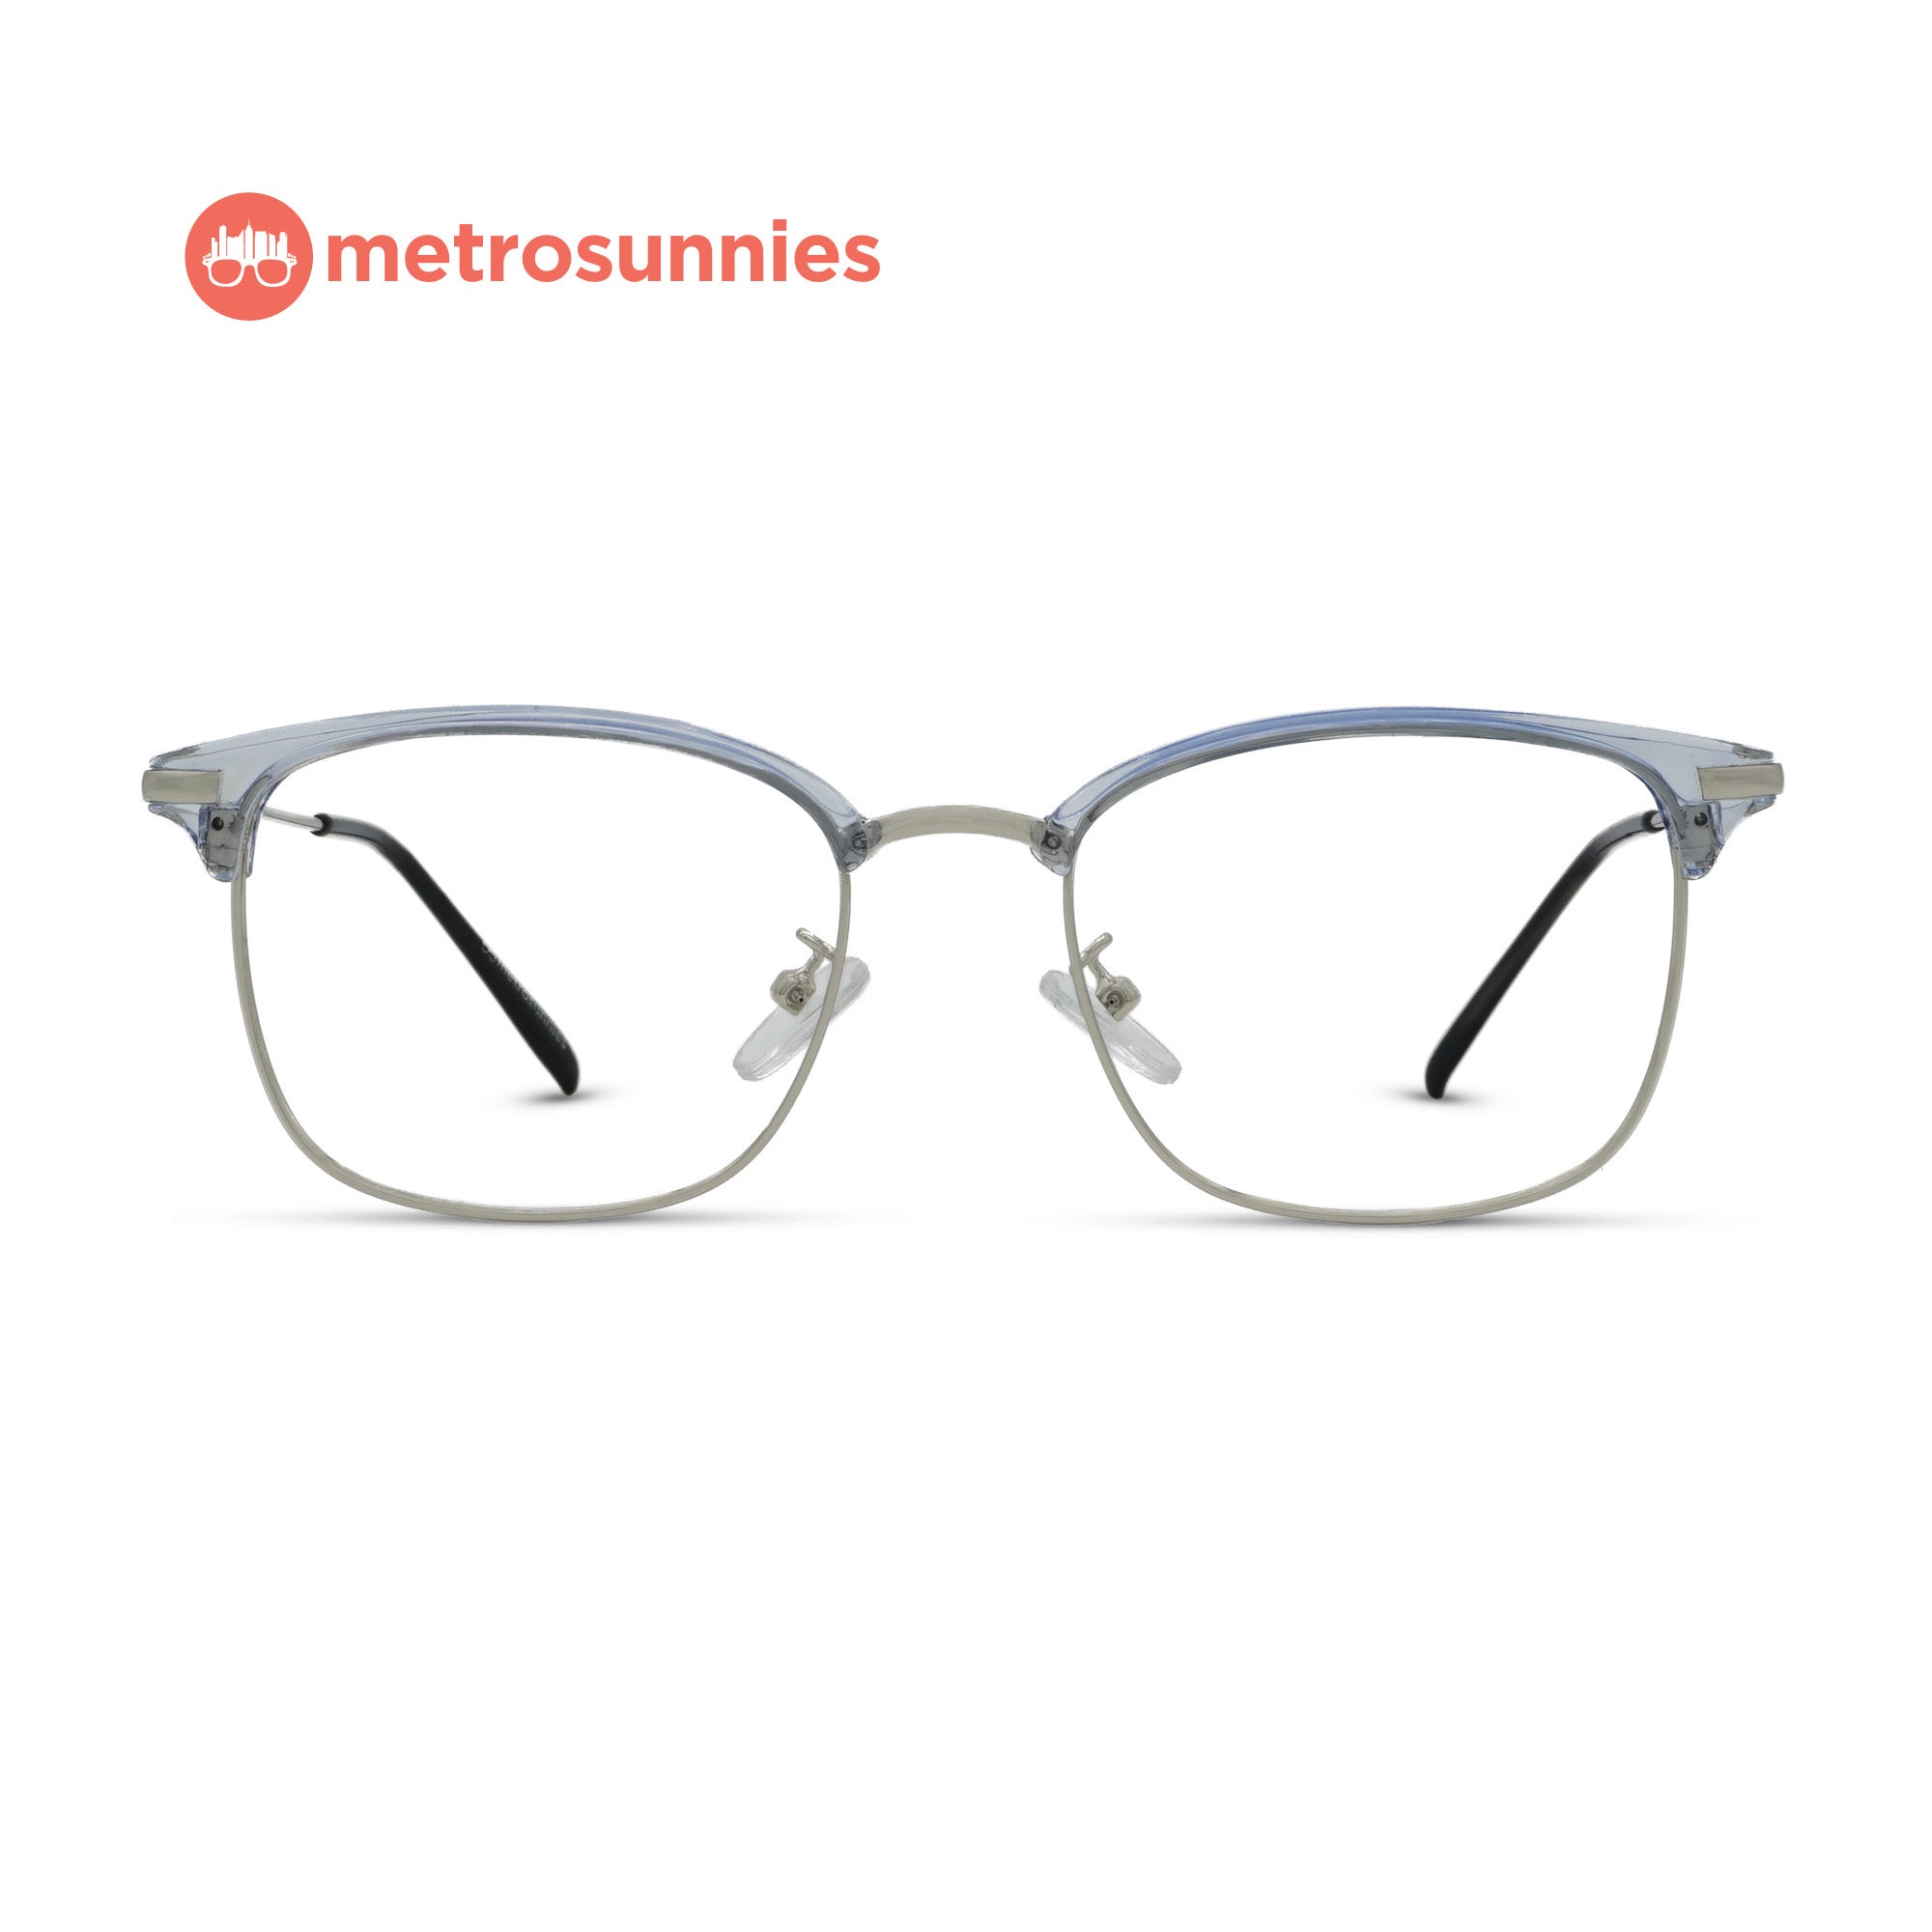 MetroSunnies Nathan Specs (Azure) / Replaceable Lens / Eyeglasses for Men and Women